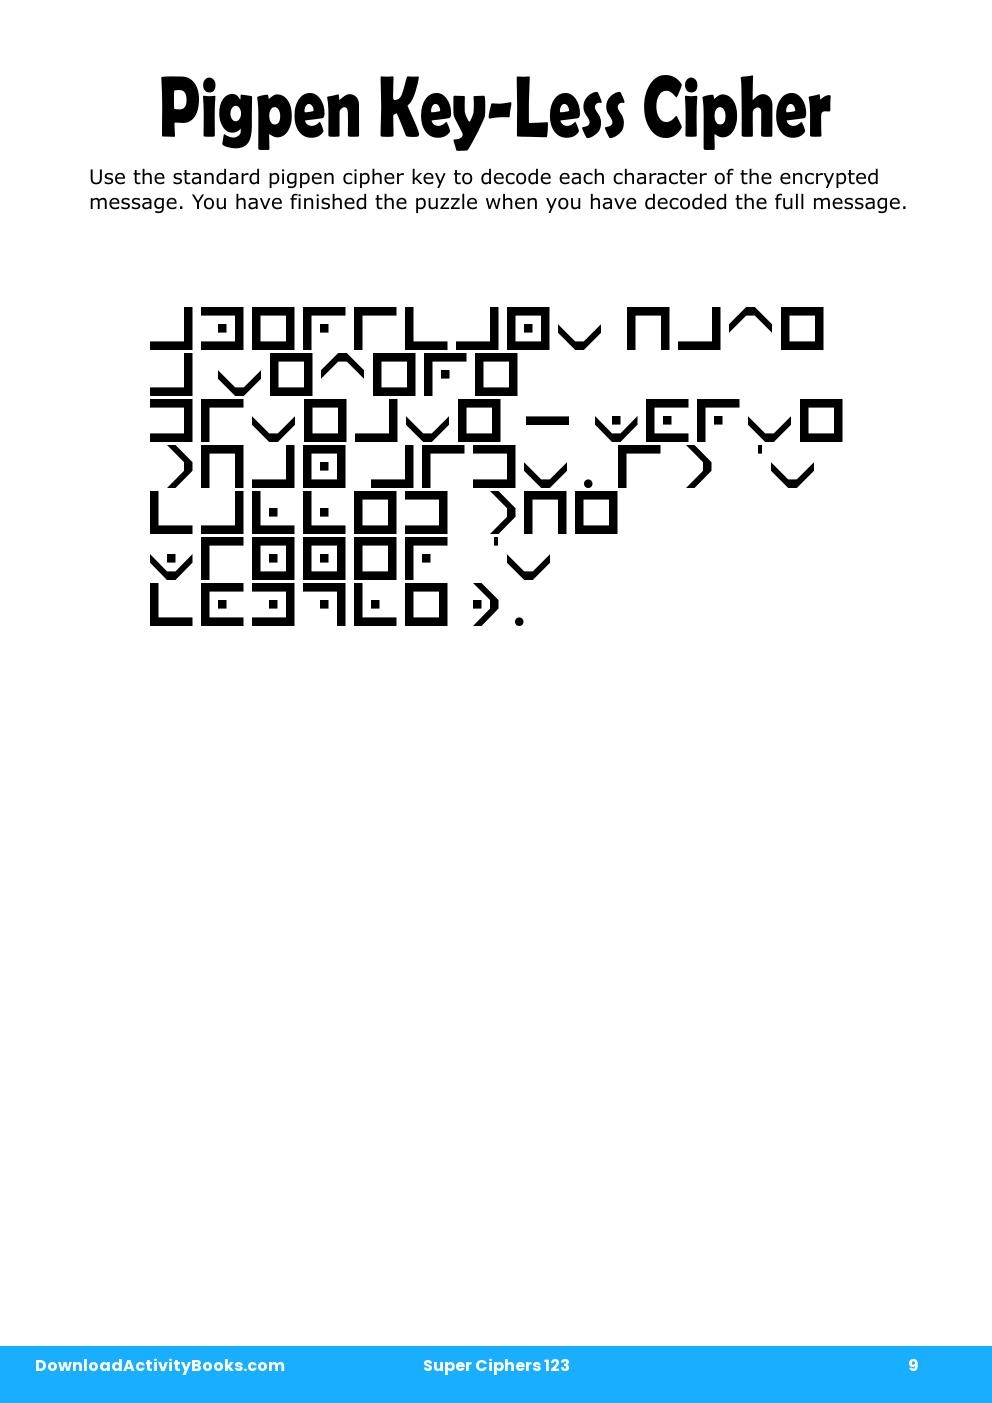 Pigpen Cipher in Super Ciphers 123